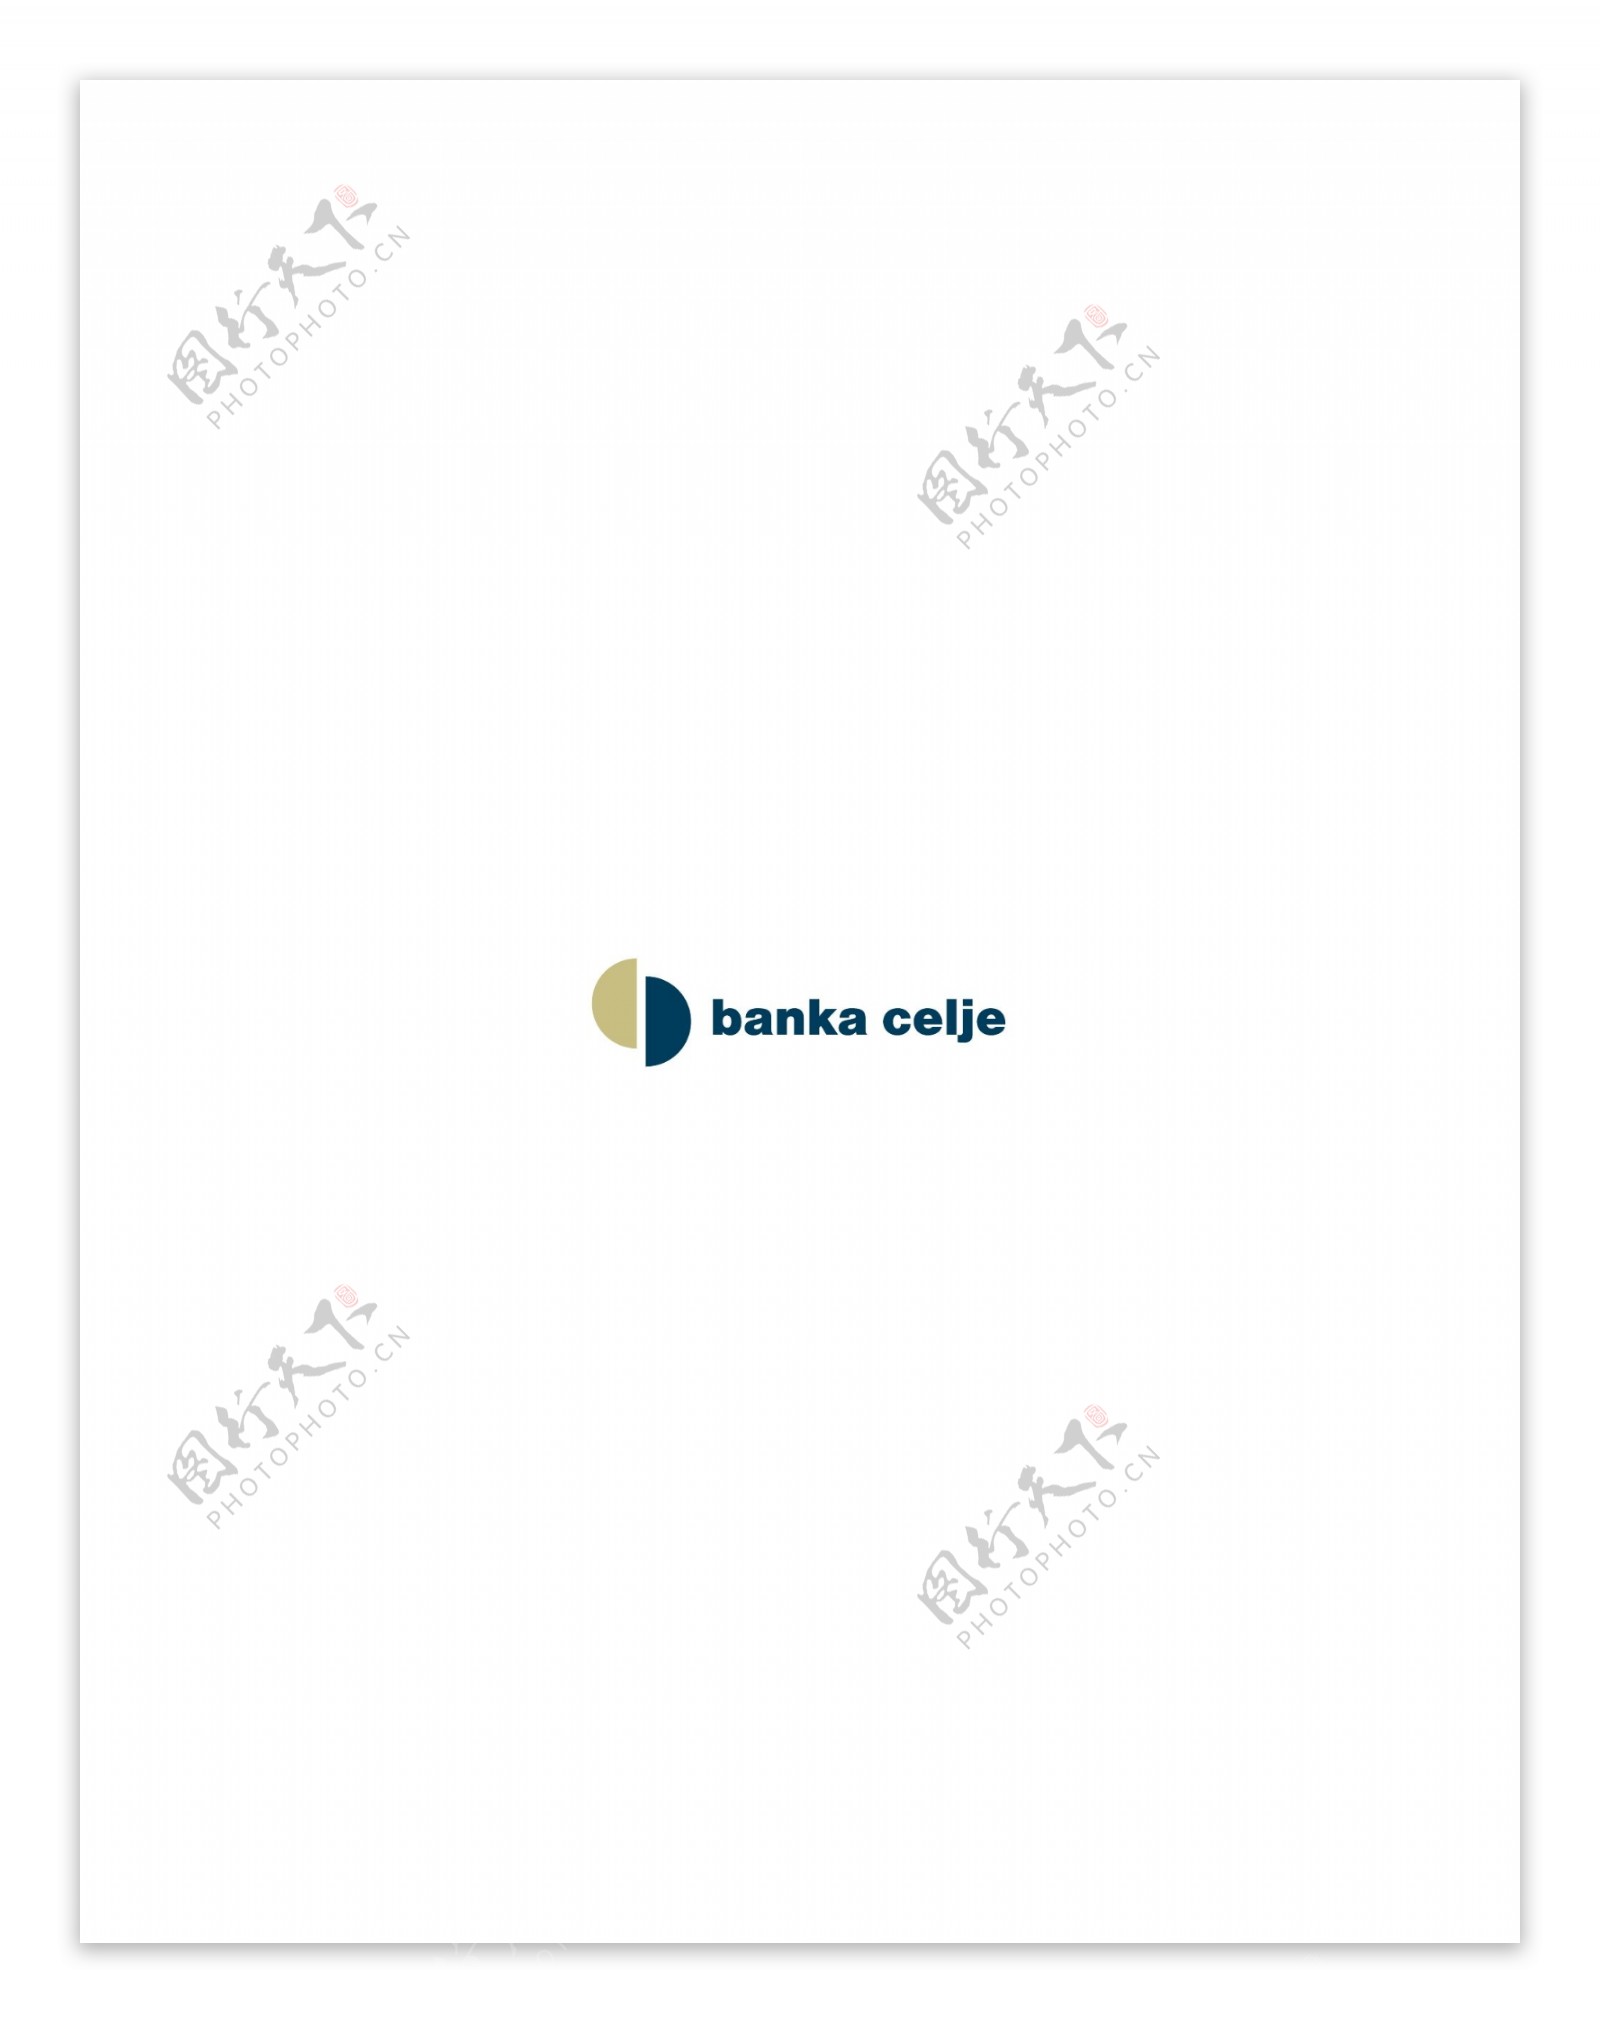 BankaCeljelogo设计欣赏BankaCelje信用卡标志下载标志设计欣赏